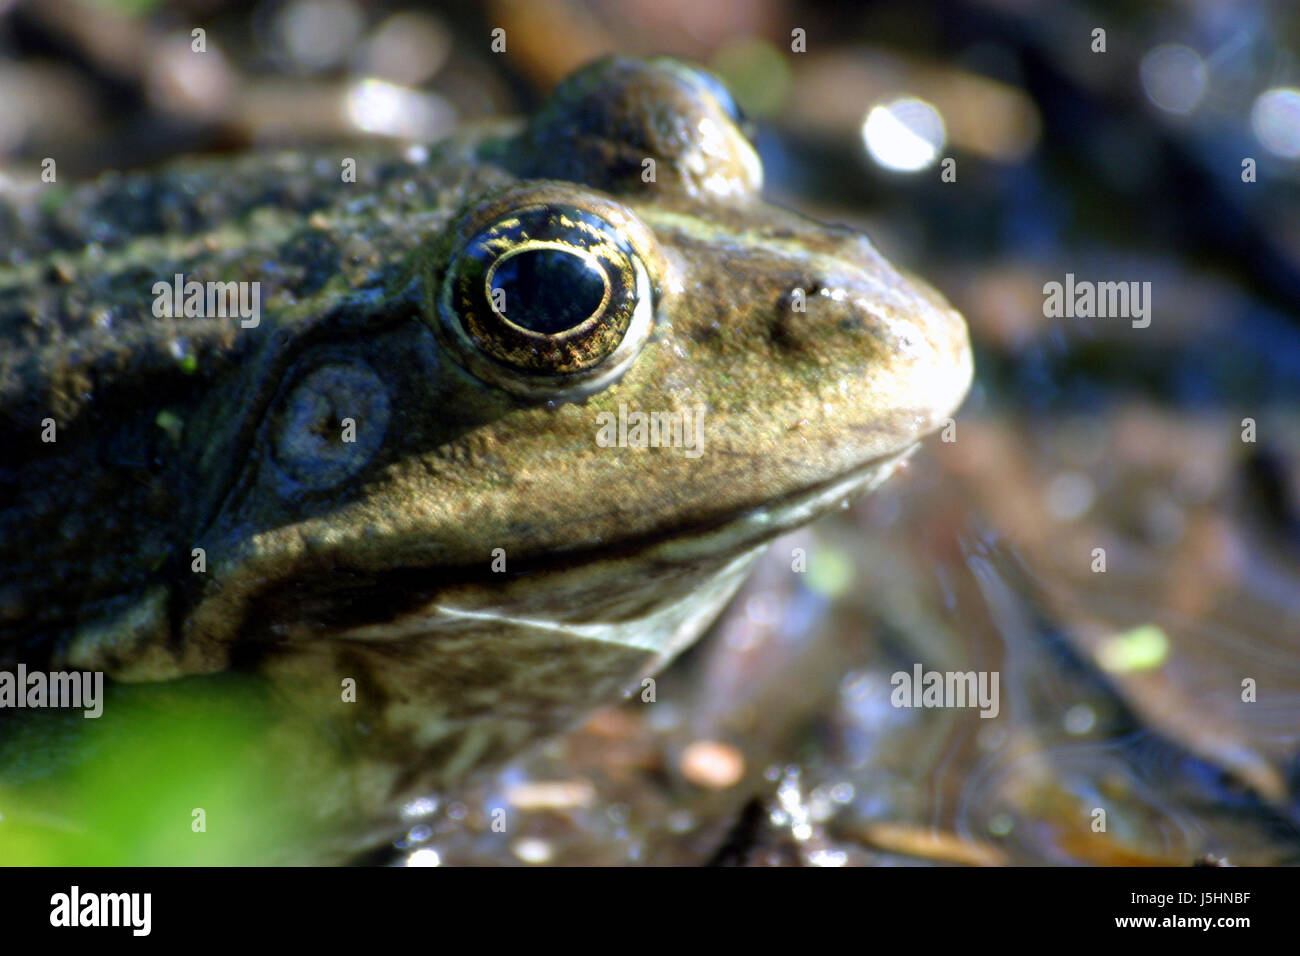 macro close-up macro admission close up view amphibian portrait eye organ frog Stock Photo